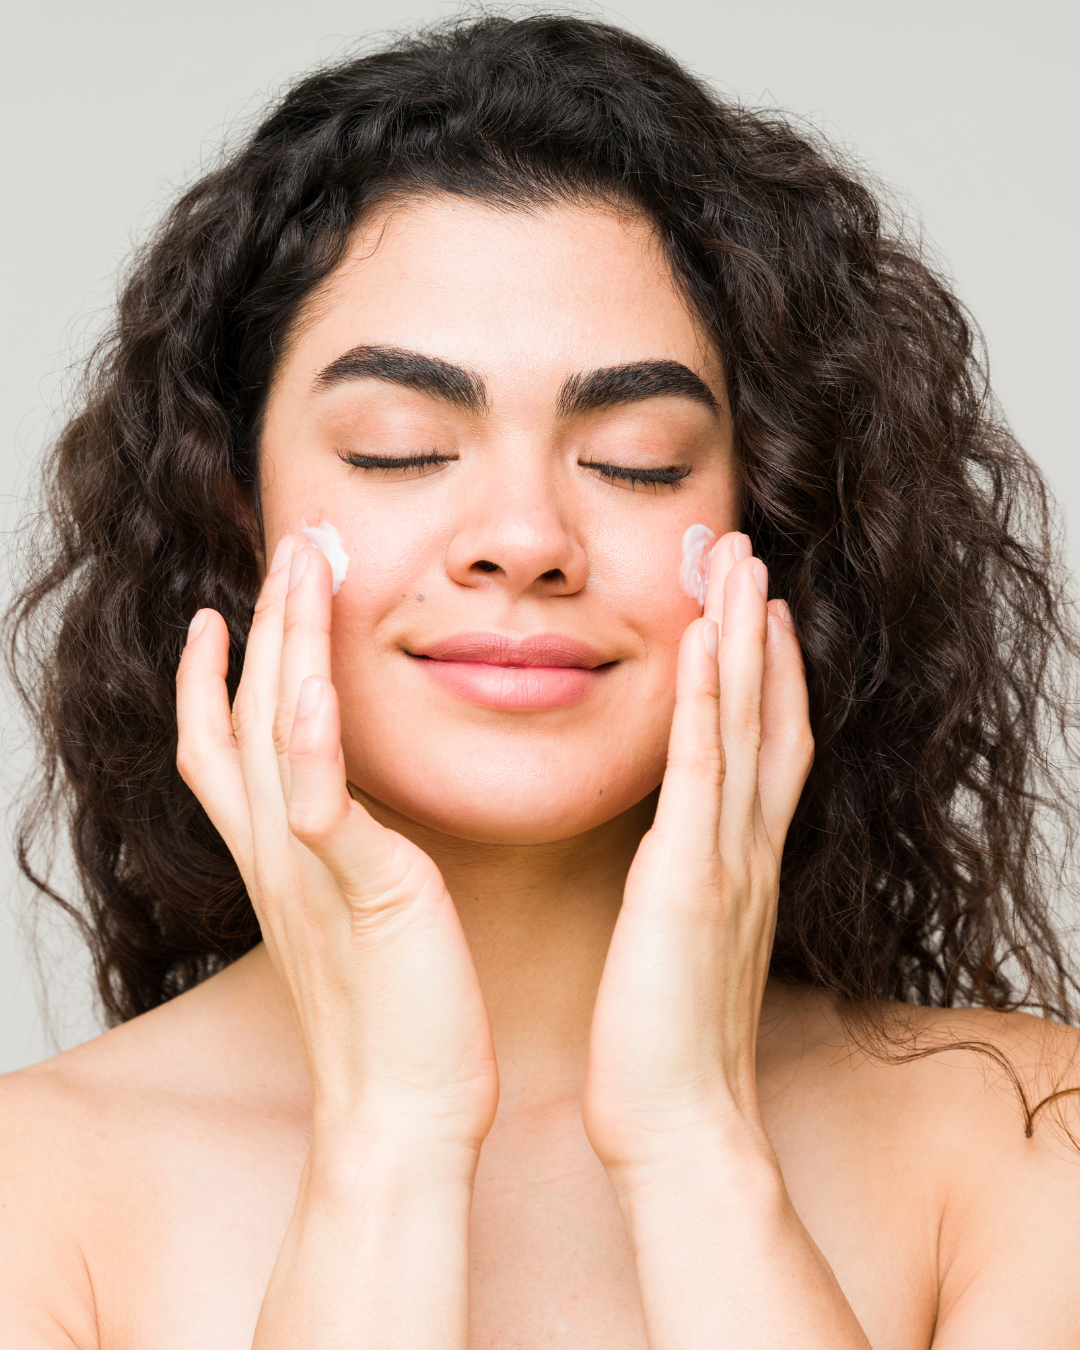 Skin Dopamine Intensely Moisturizing Face Cream with SPF 50